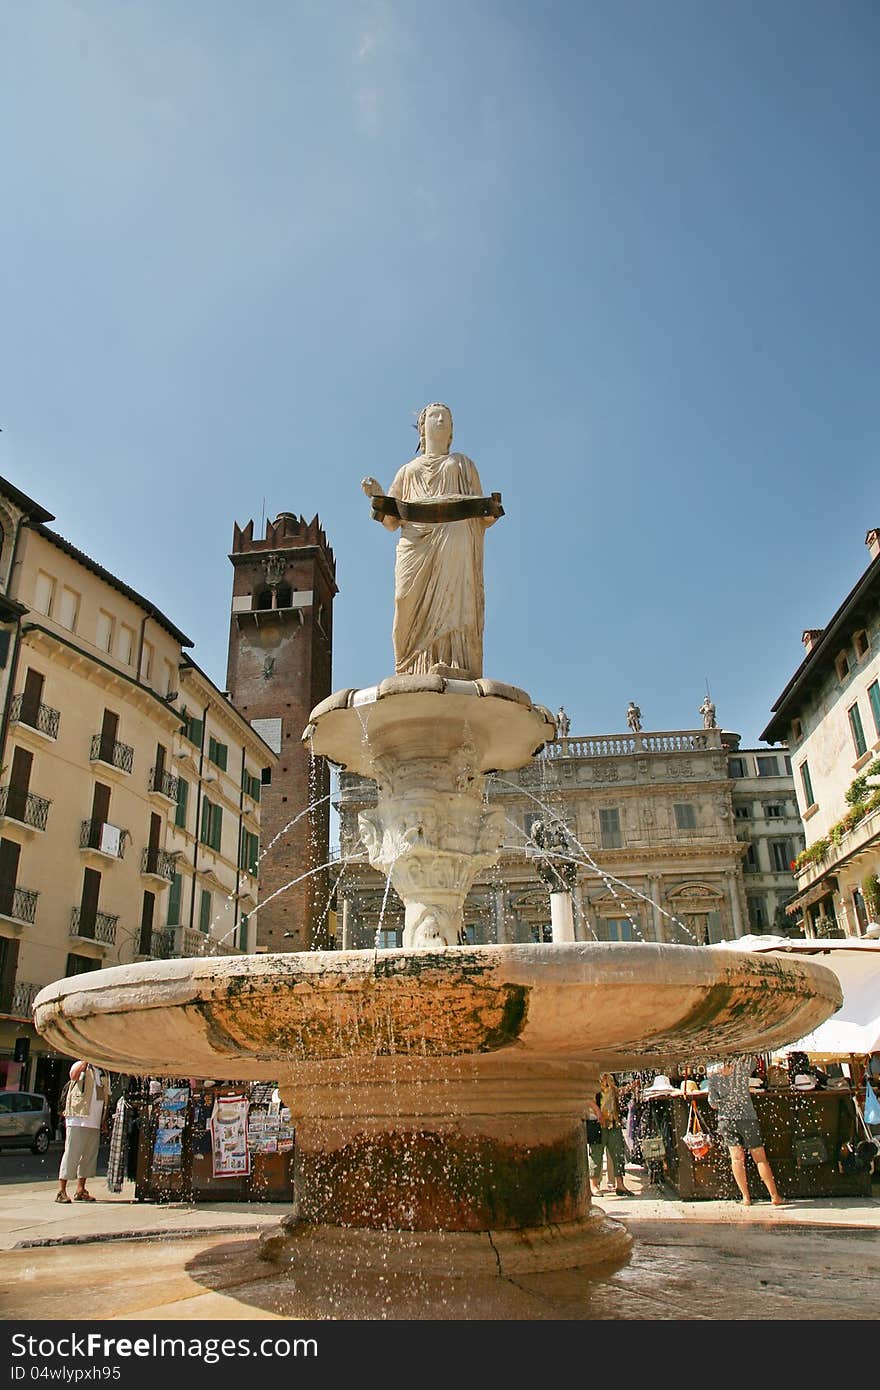 Statue of the Madonna in Piazza Erbe Verona, Italy